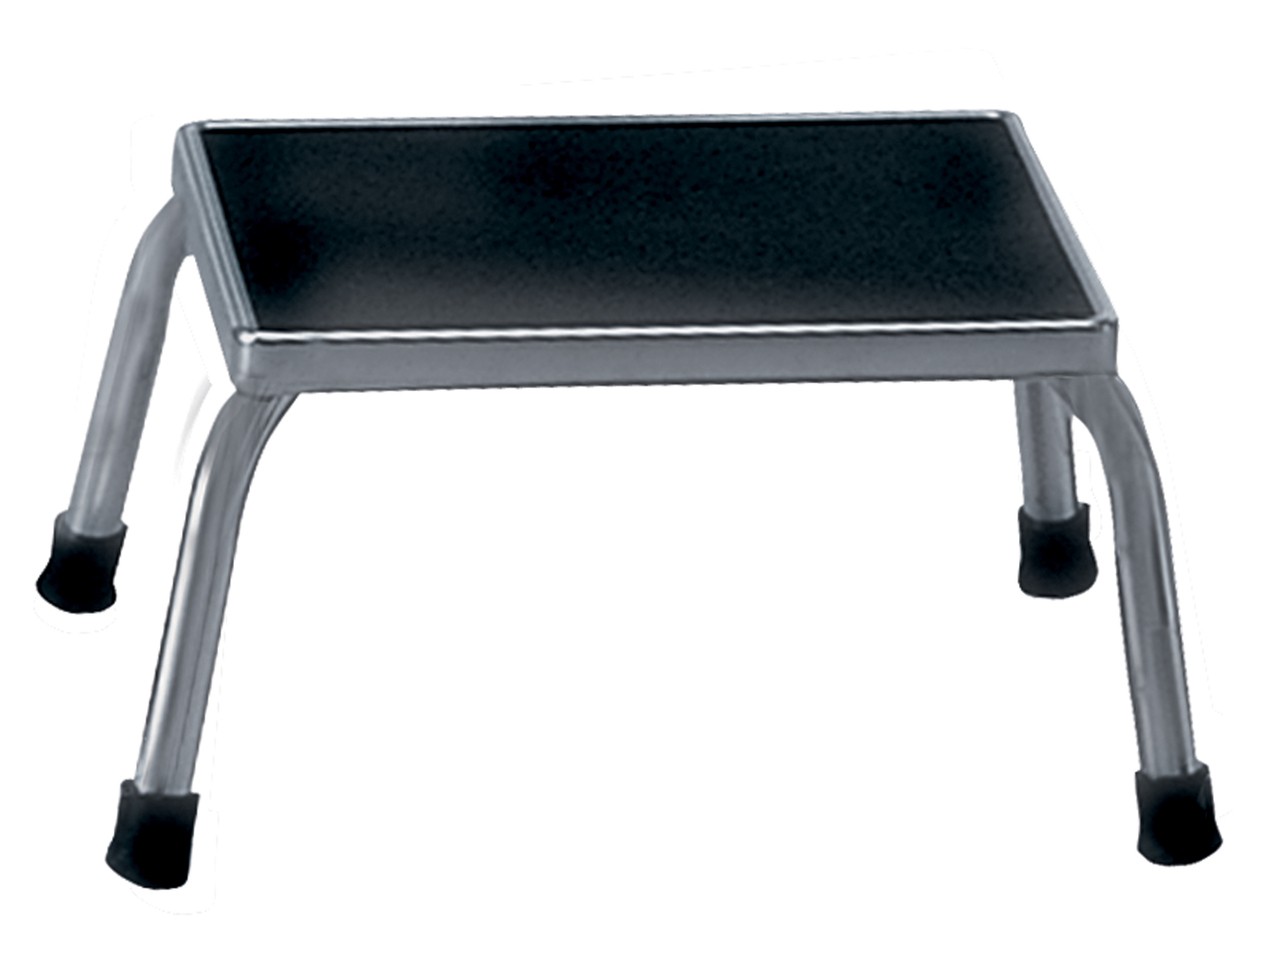 Chrome step stool usa medical and surgical supplies